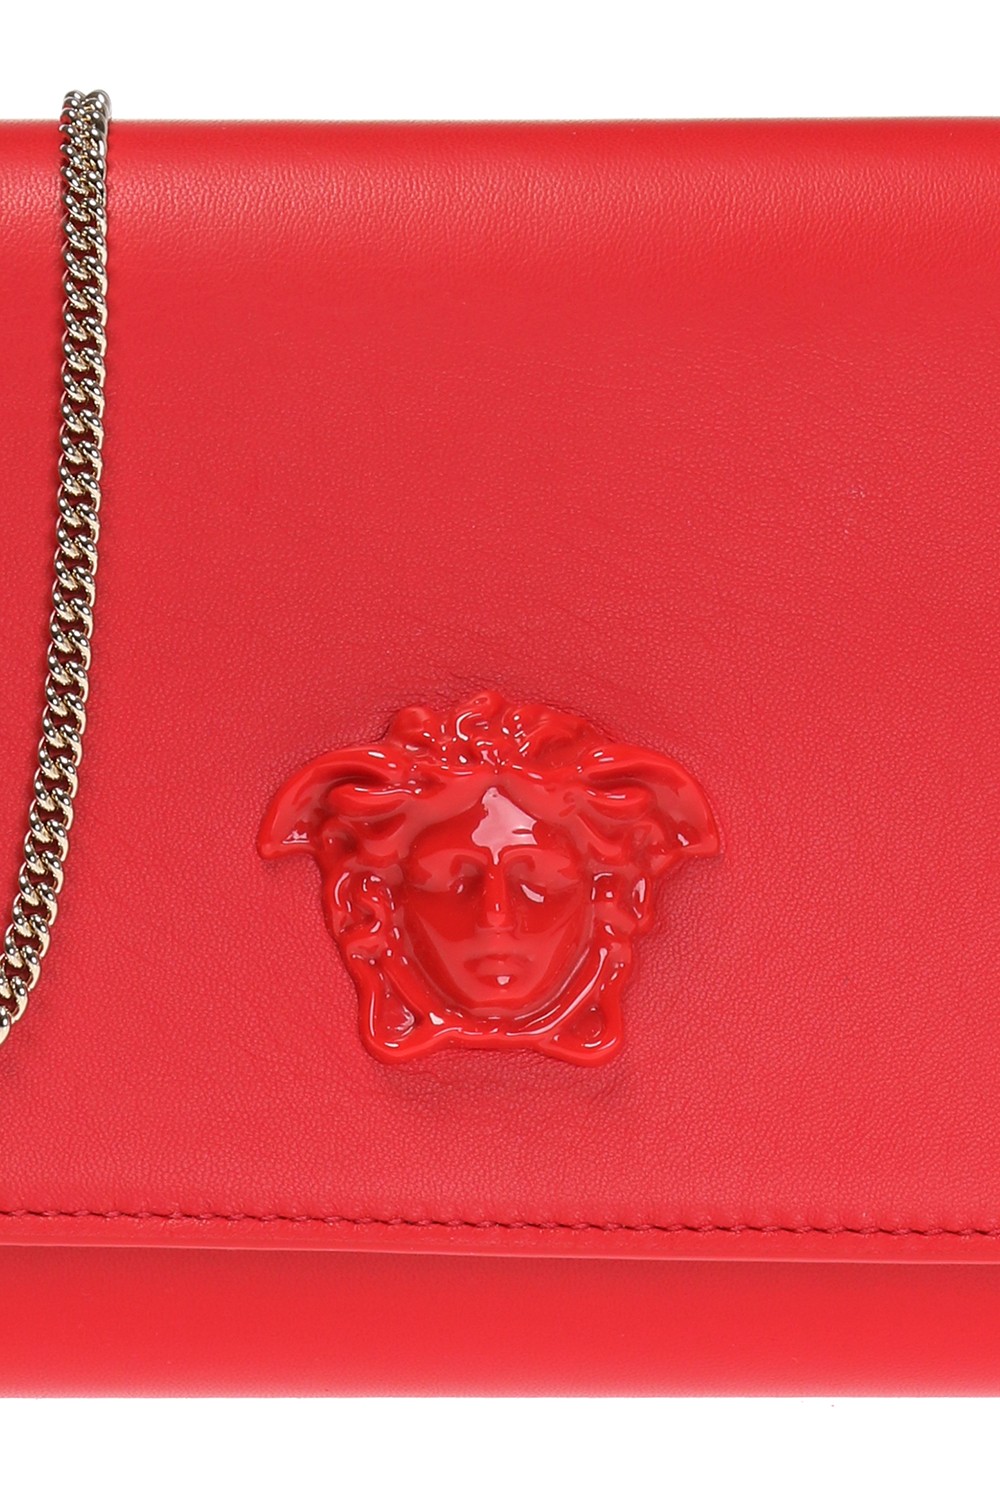 Versace Medusa Calfskin Leather Chain Clutch Bag Red